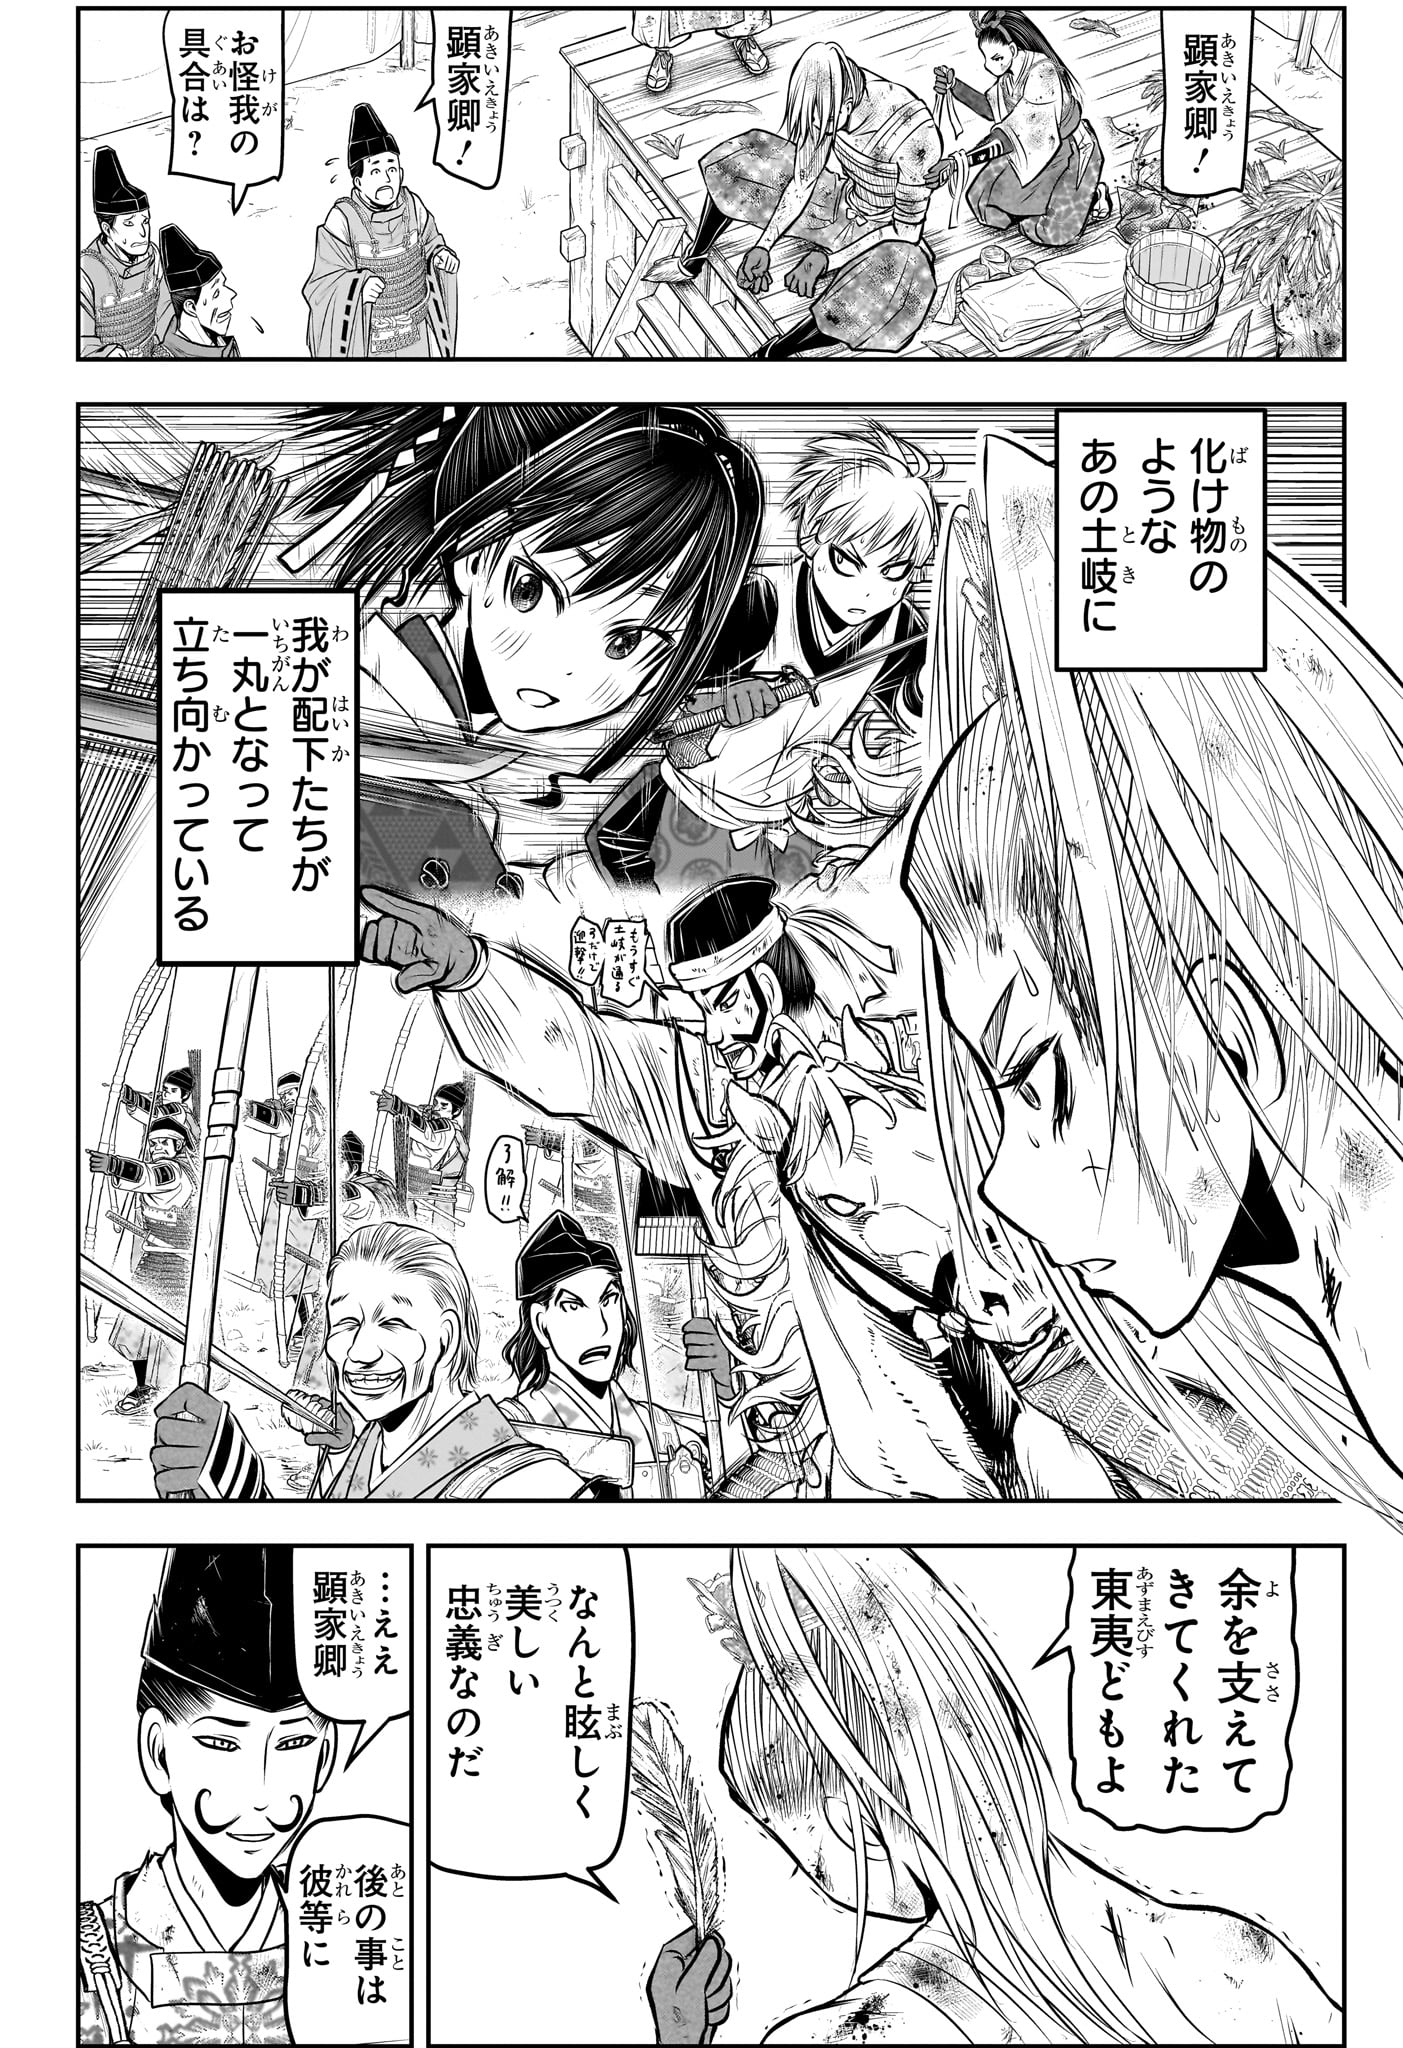 Nige Jouzu no Wakagimi - Chapter 143 - Page 18